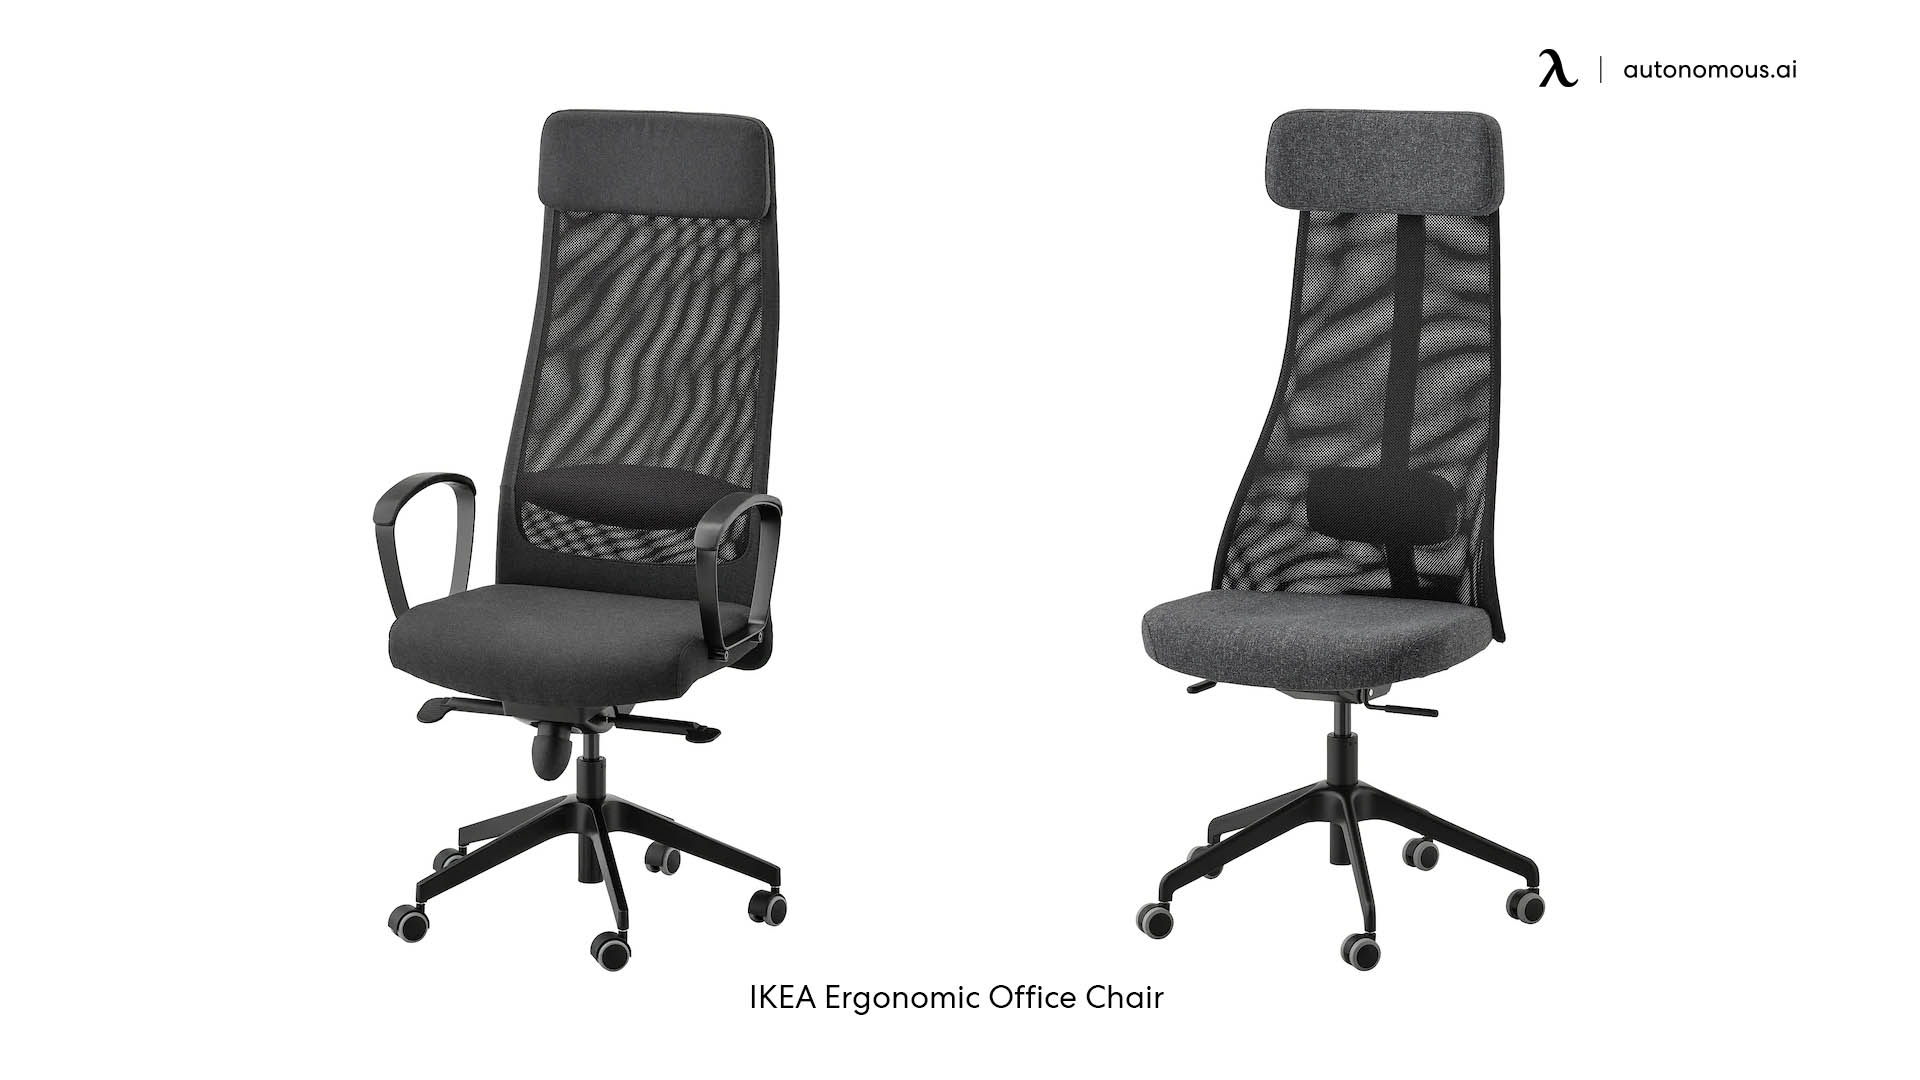 IKEA Ergonomic Office Chair